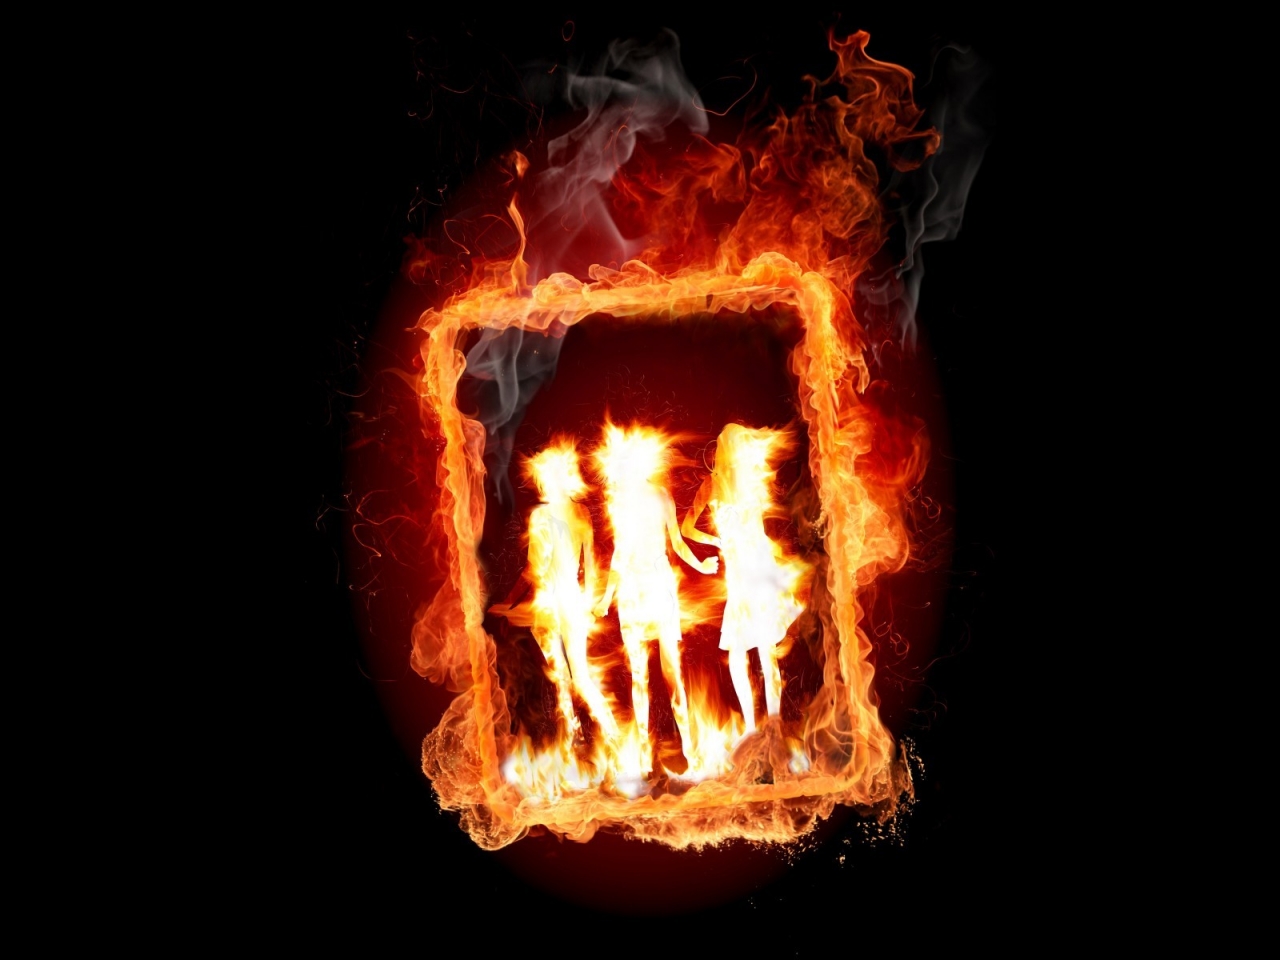 Girl Frame in Fire for 1280 x 960 resolution